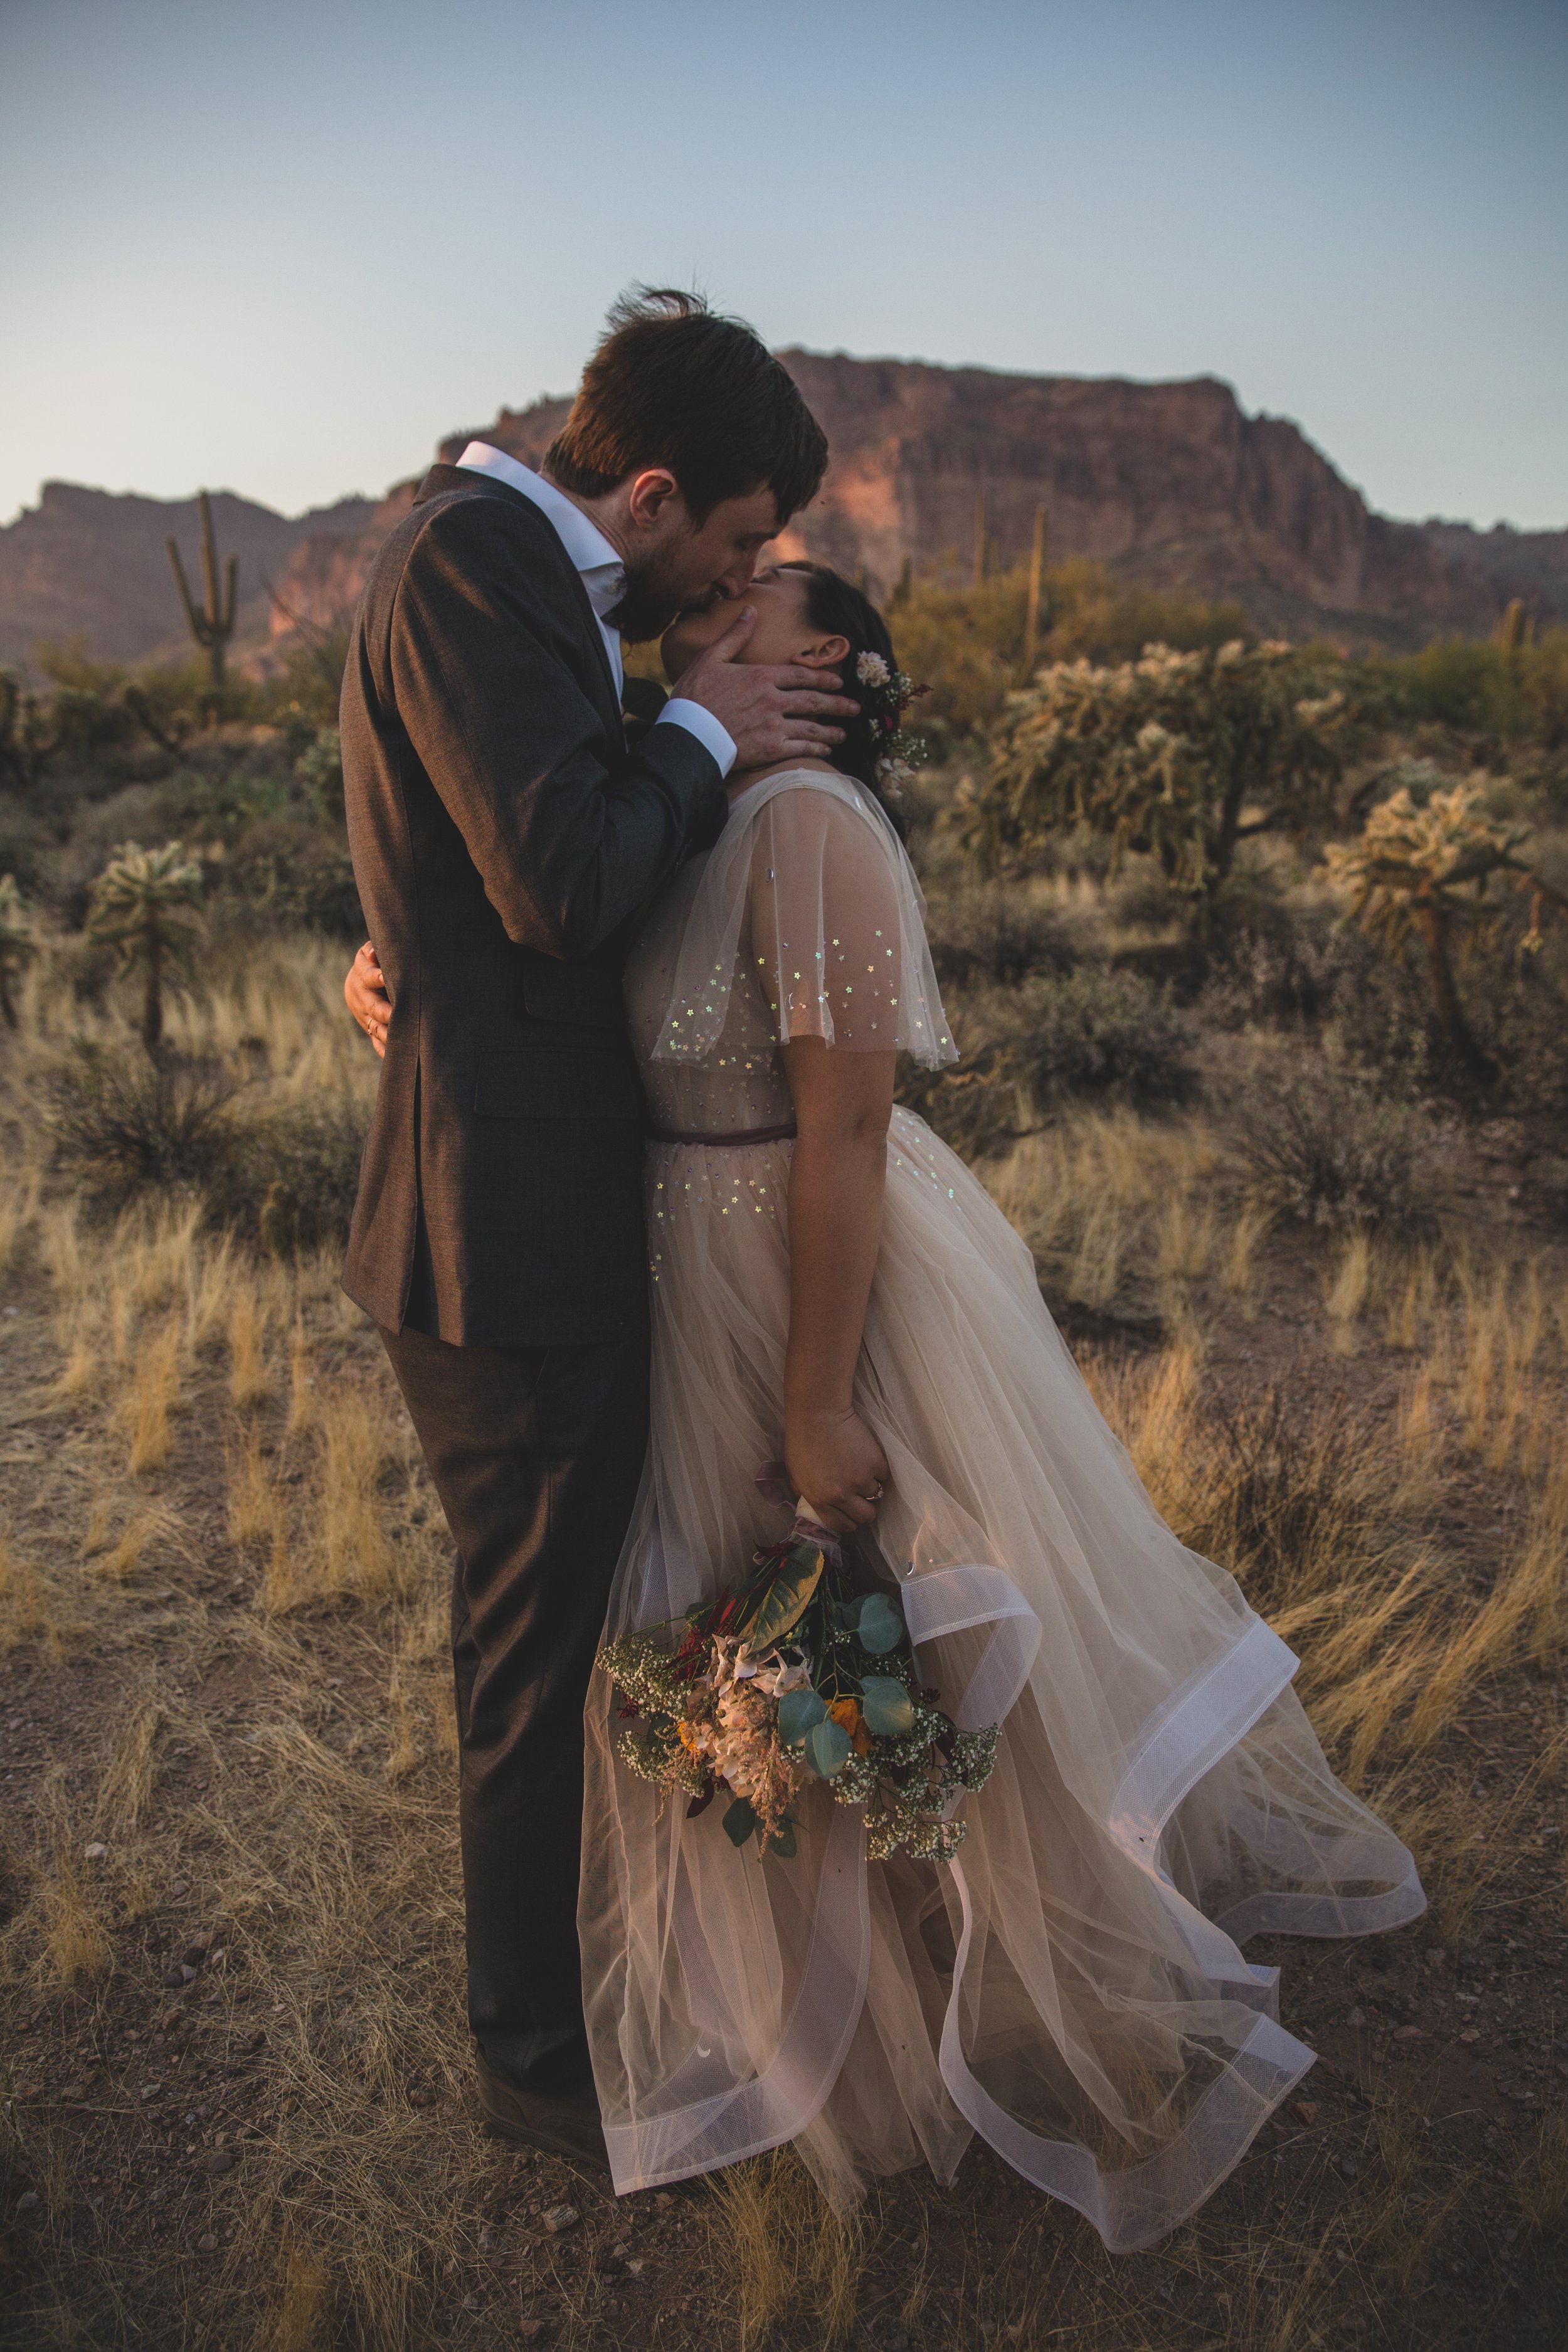 Details of handmade wedding dress for couple’s intimate Superstition Mountain micro wedding in  rural Arizona by destination wedding photographer, Jennifer Lind Schutsky. 